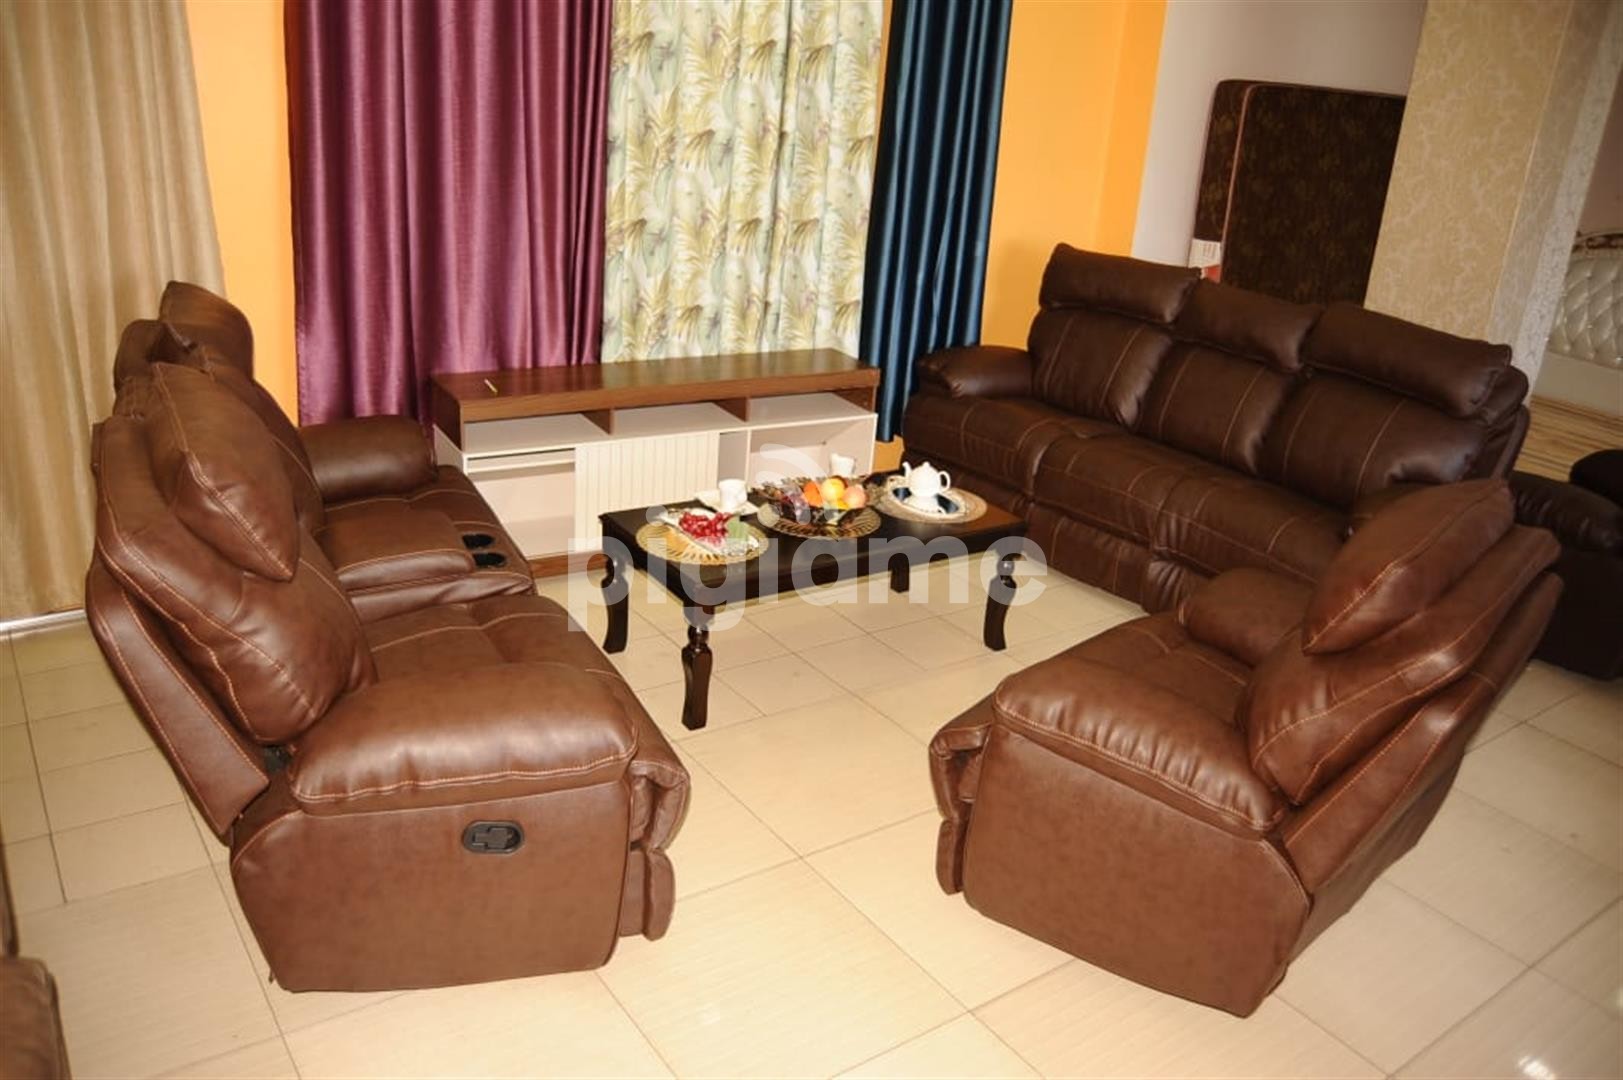 leather sofa set price in kenya